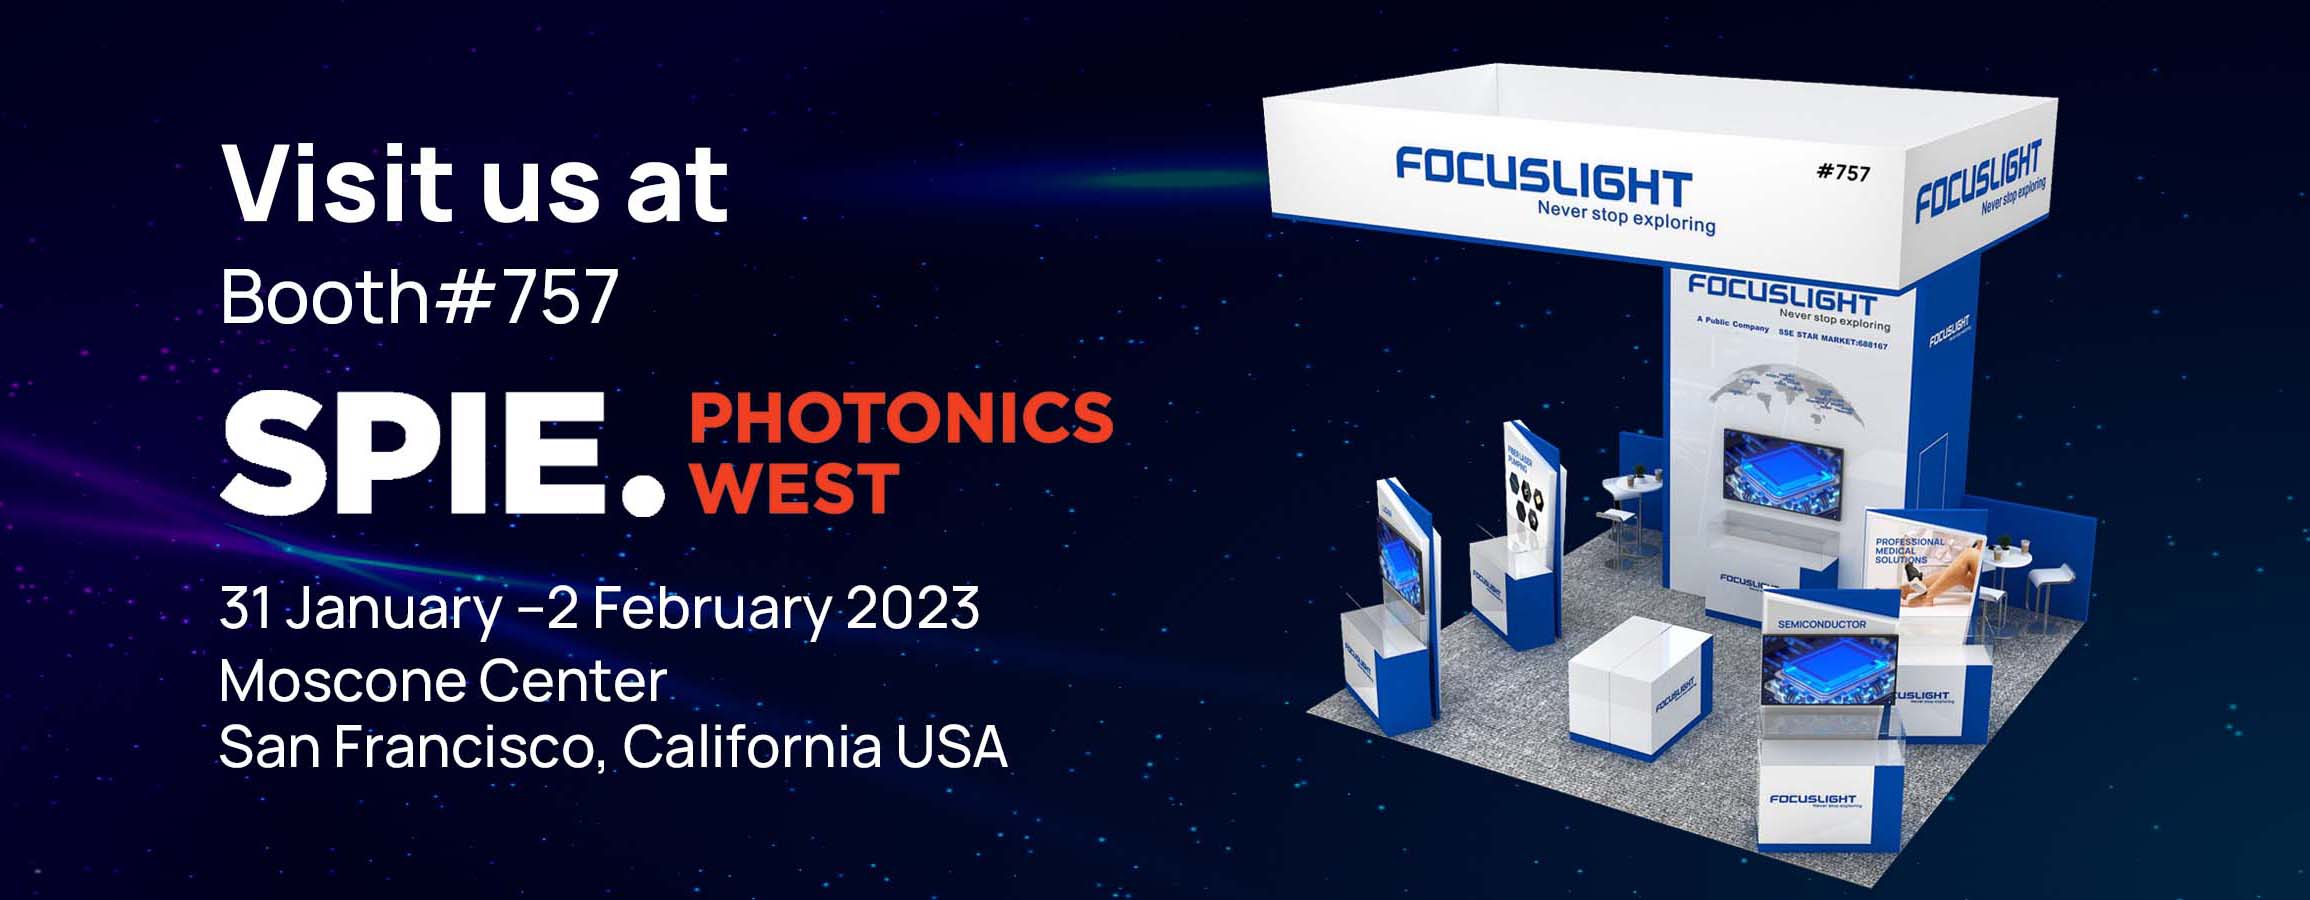 Focuslight Technologies Will Exhibit at SPIE Photonics West 2023